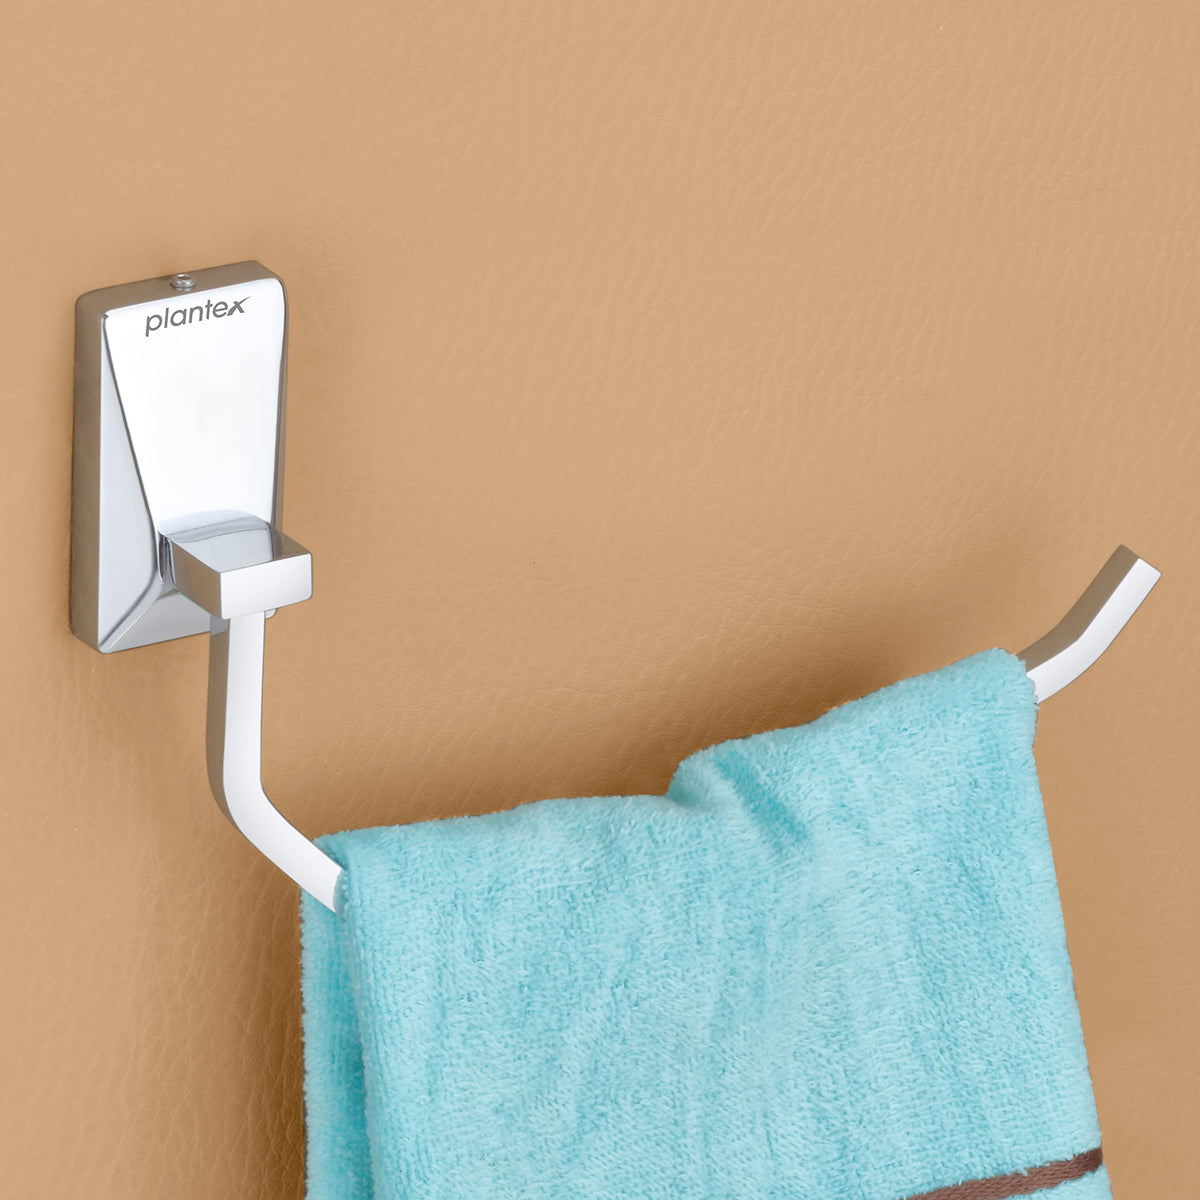 Plantex 304 Grade Stainless Steel Crystal Napkin Ring/Towel Ring/Towel Holder/Towel Hanger for Bathroom/Bathroom Accessories - Pack of 1 (APS-892-Chrome)